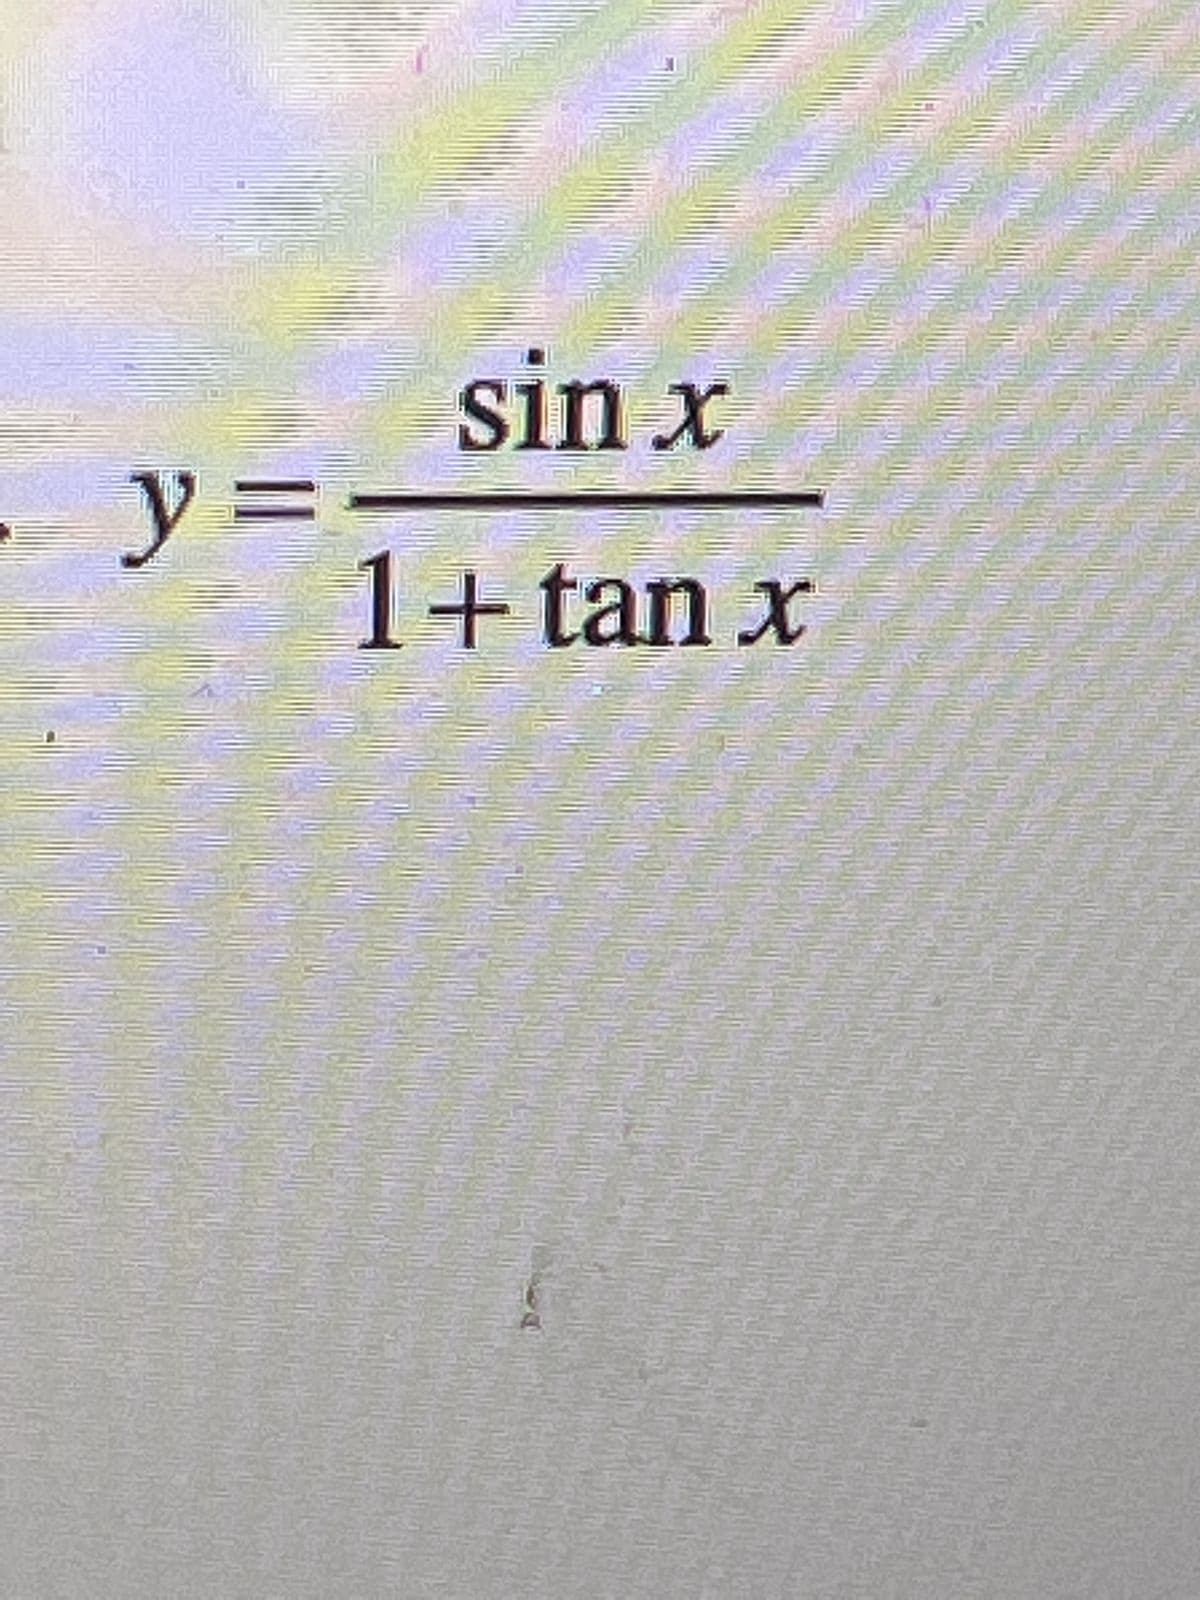 y =
sin x
1+tan x